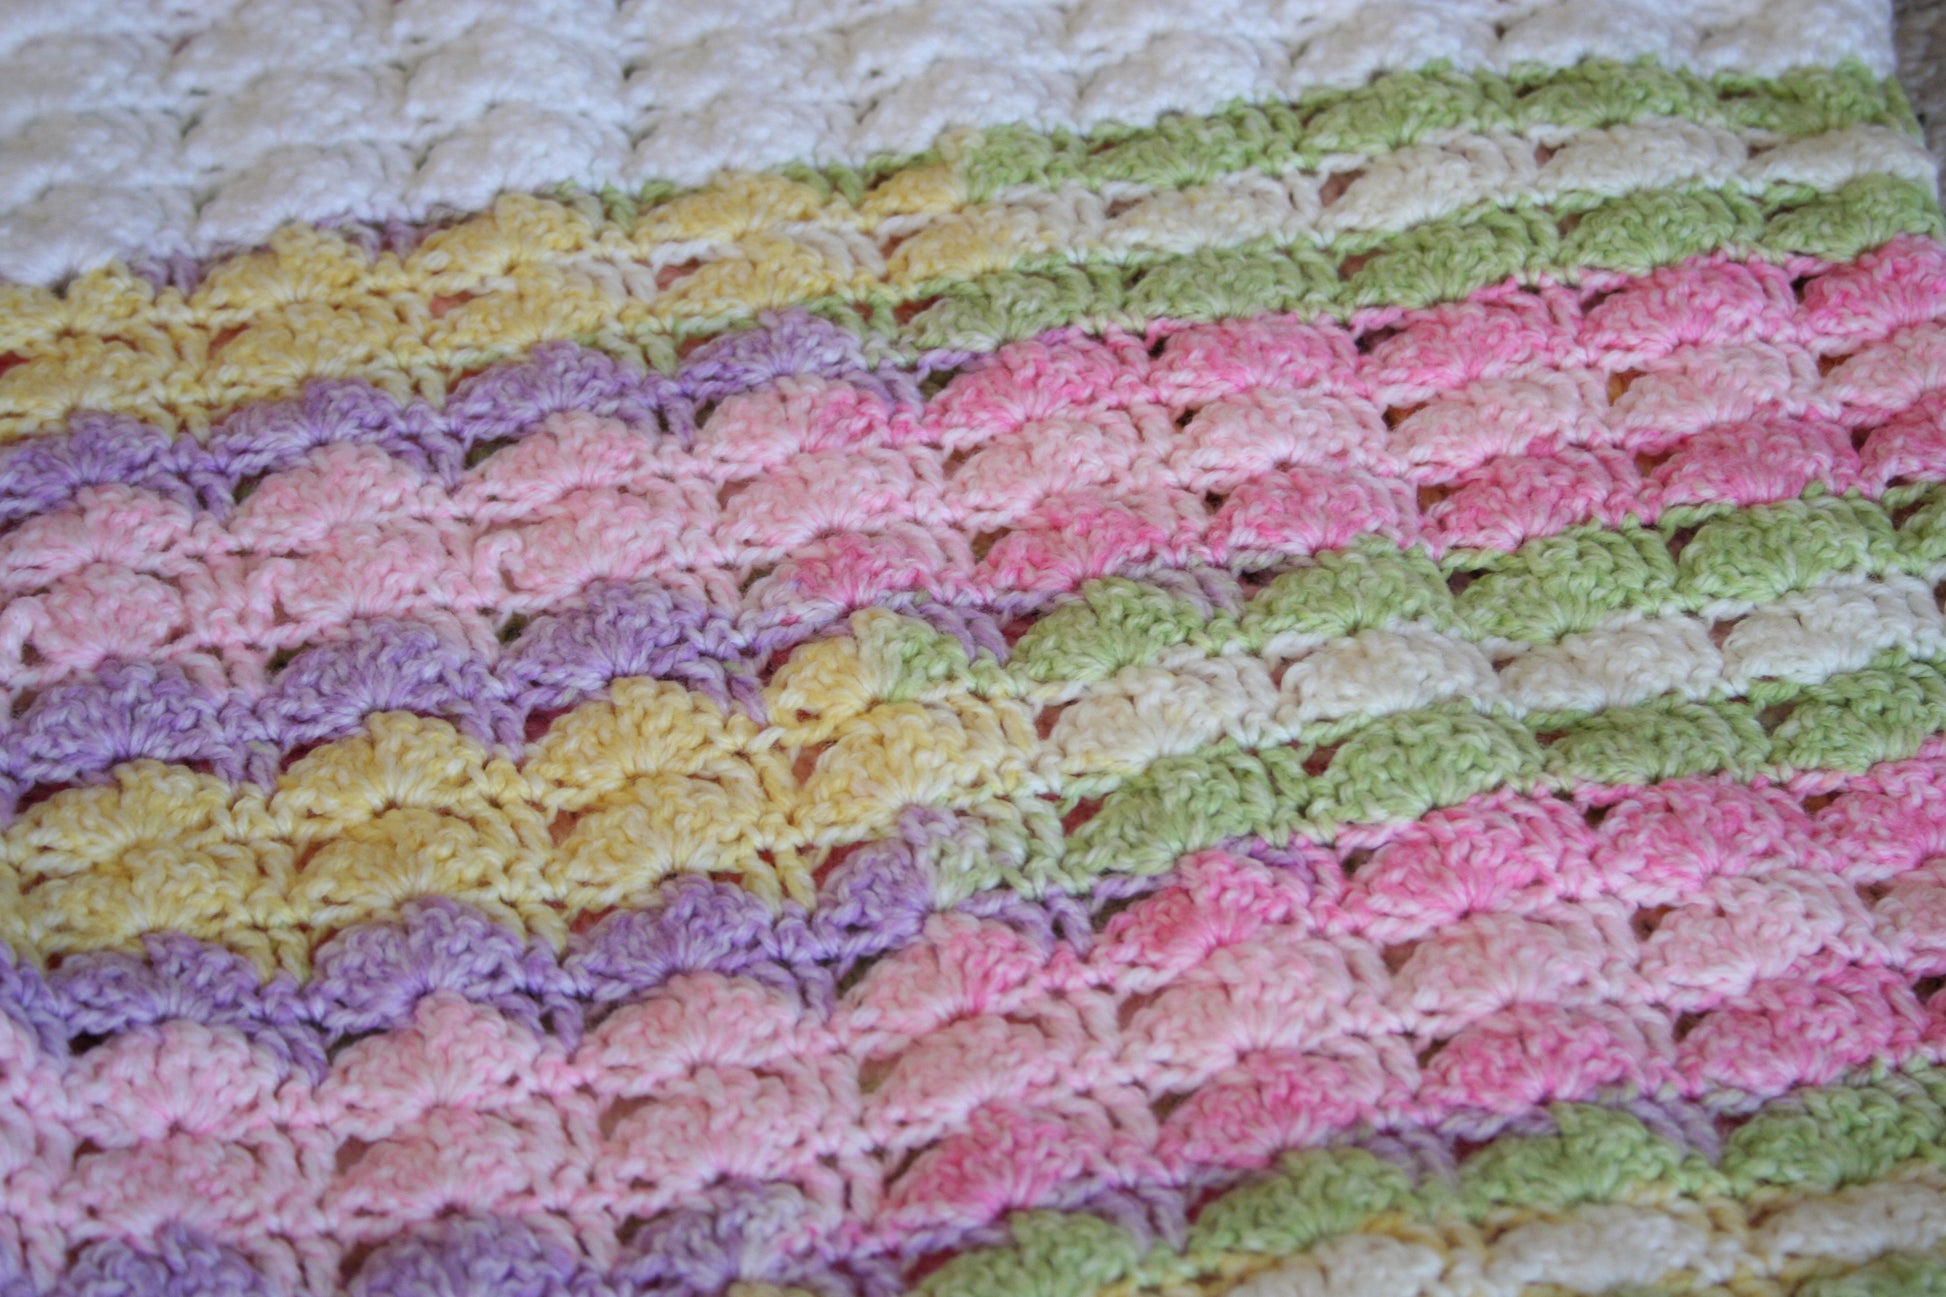 Detail of the crochet stitch pattern